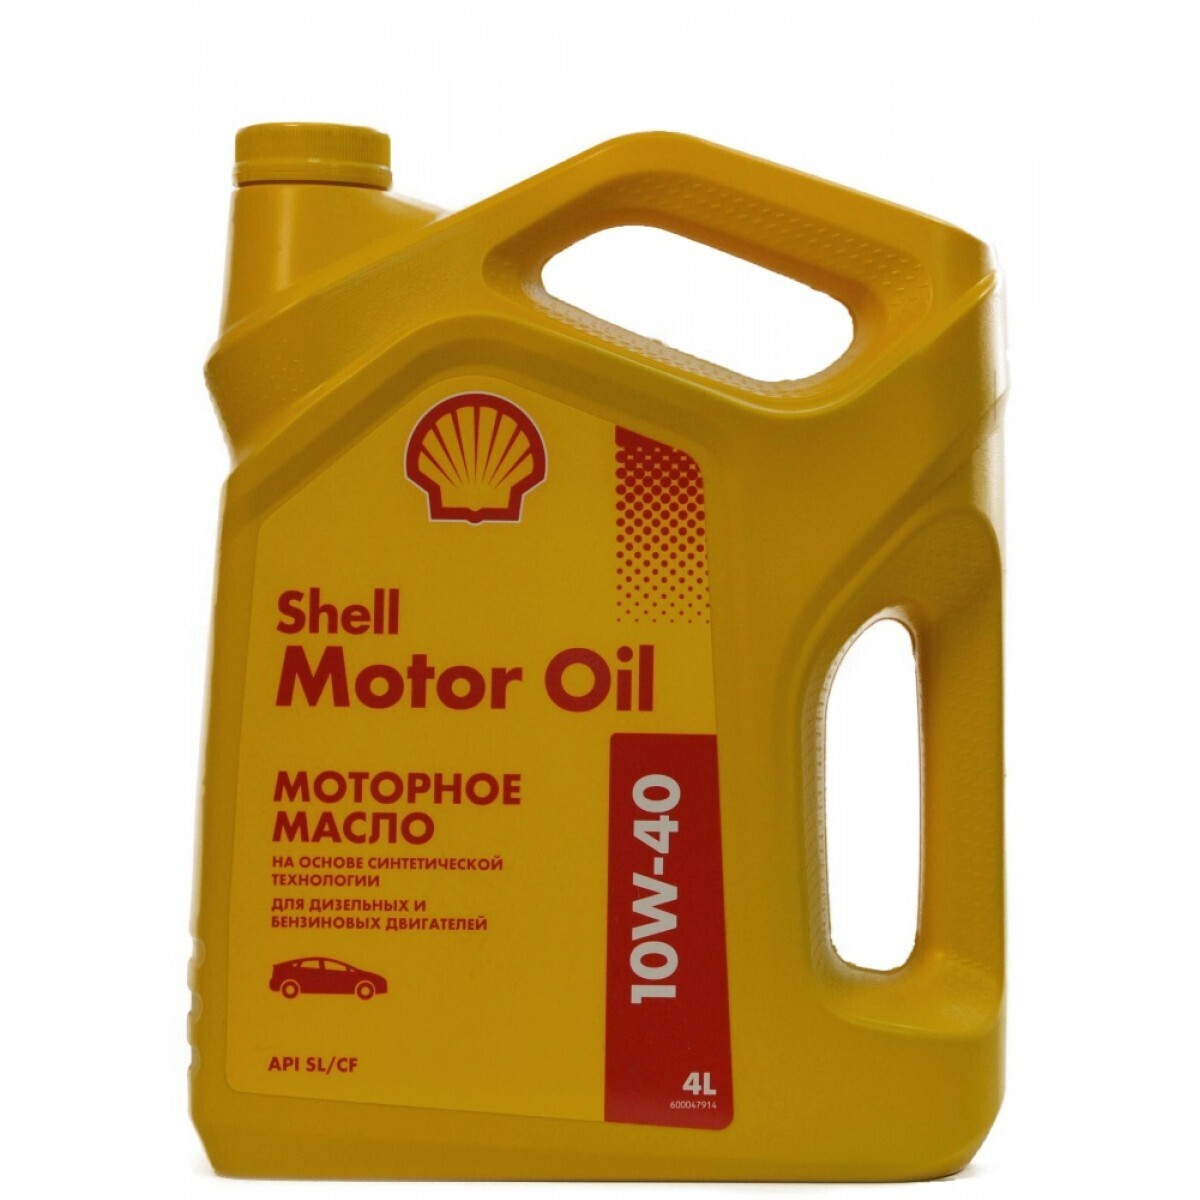 Сайт масла shell. Моторное масло Шелл 10w 40. Shell Shell Motor Oil 10w40 4л. Масло 10w 40 мотор Ойл желтая канистра Шелл испод. Шелл мотор Ойл 5/40.